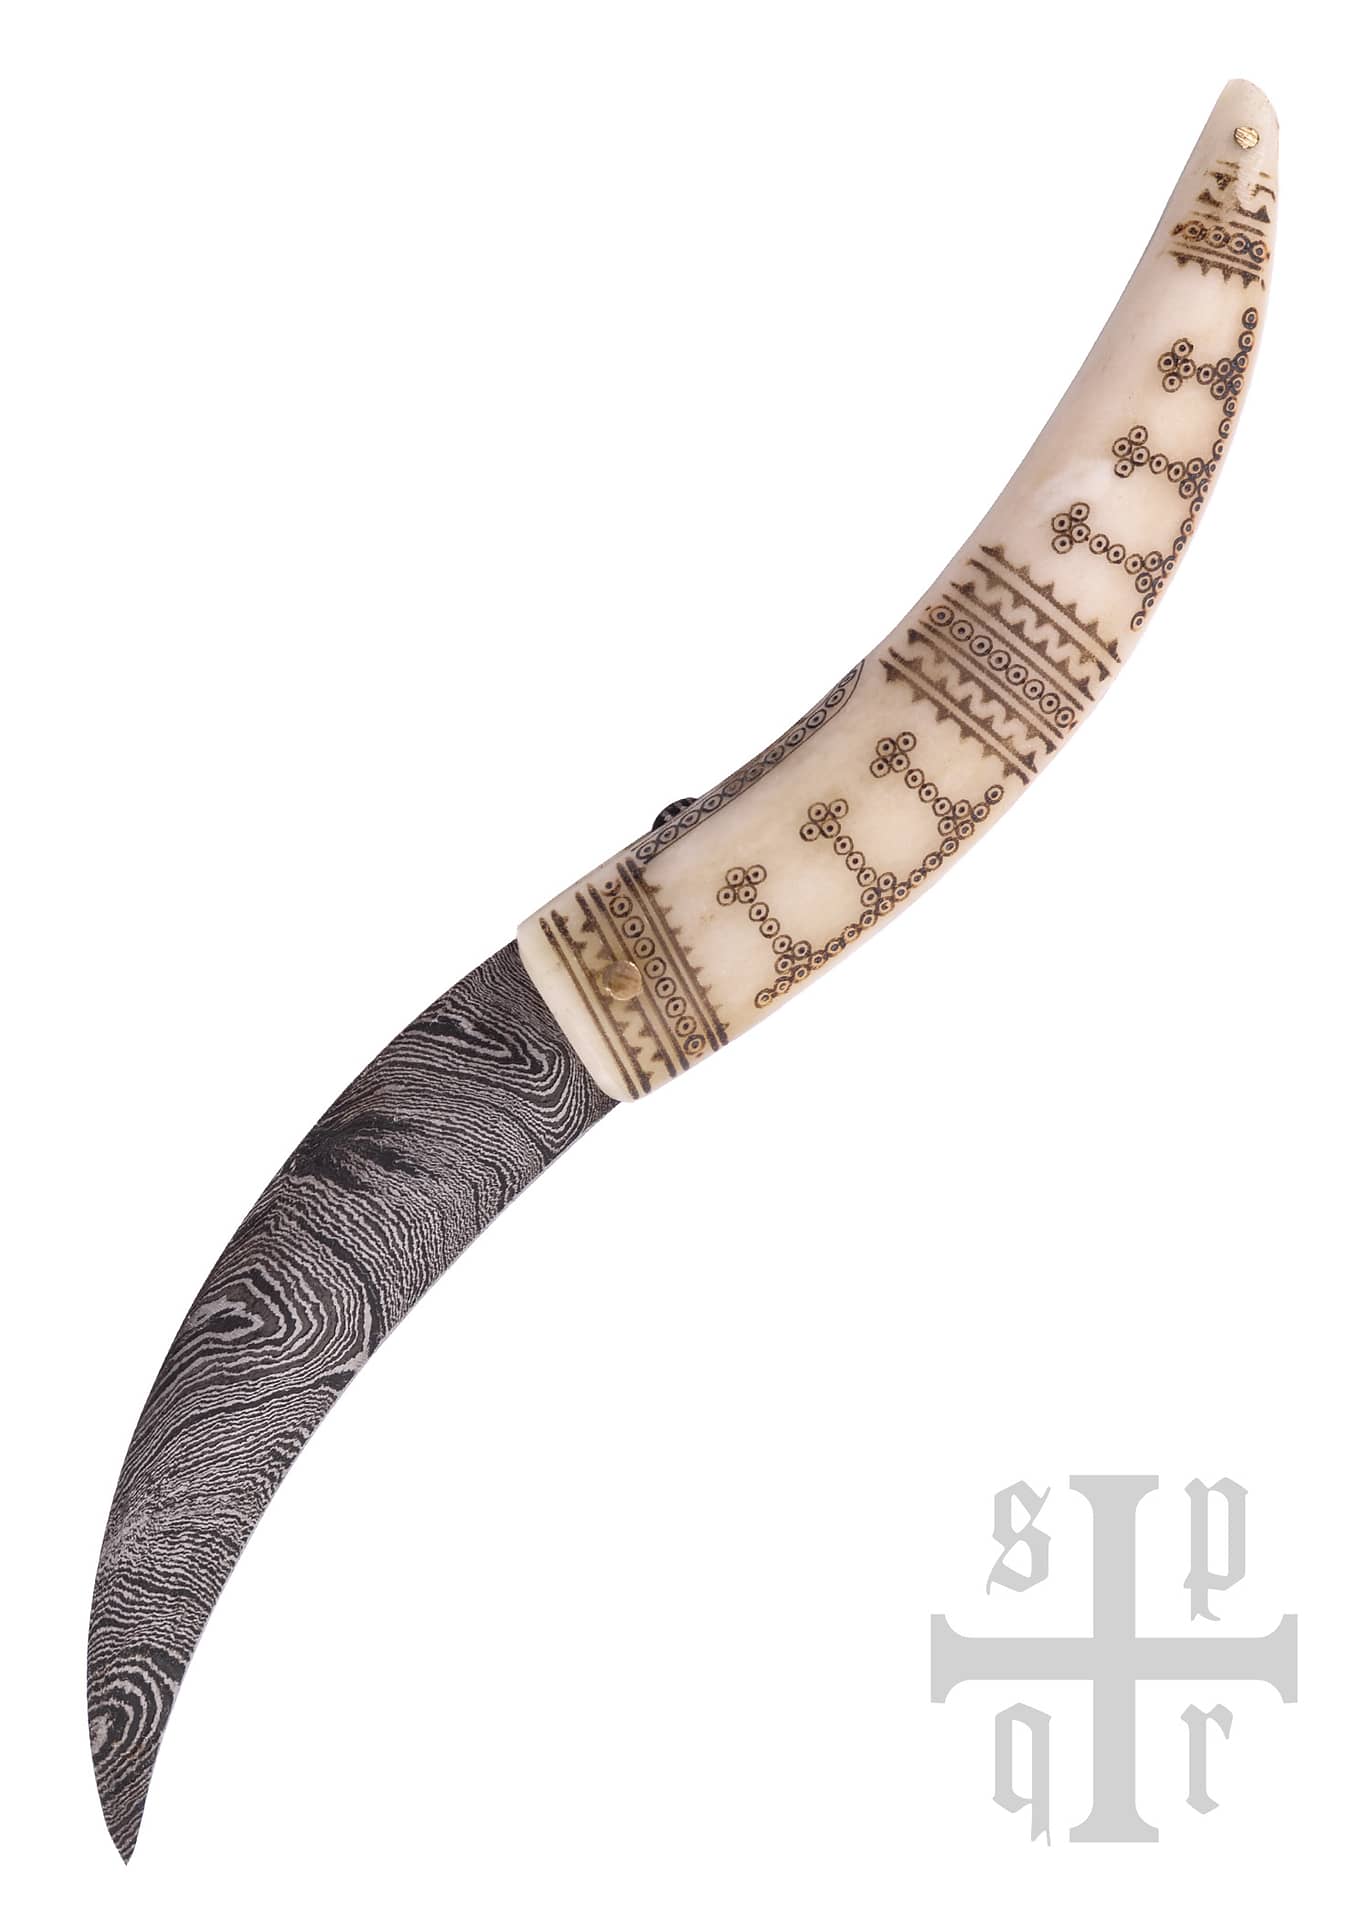 Cuchillo Vikingo Plegable de Acero Damasco, Mango de Hueso 0364002462 - Espadas y Más